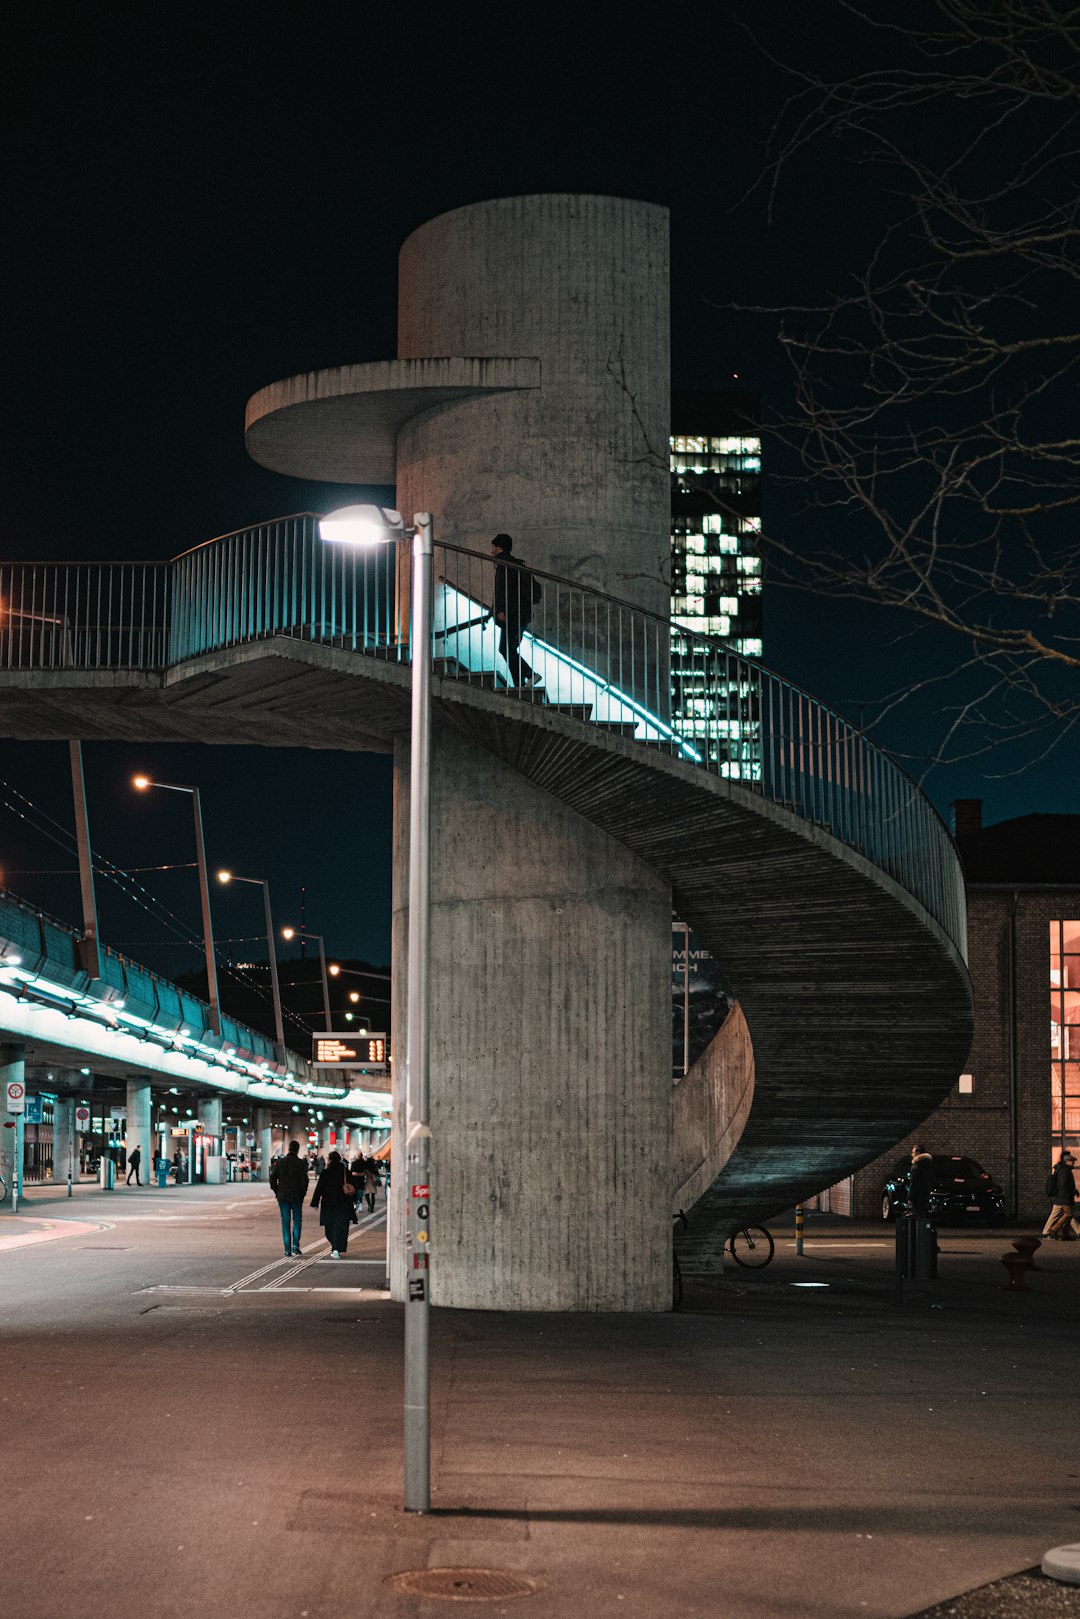 people walking on sidewalk near lighted bridge during night time